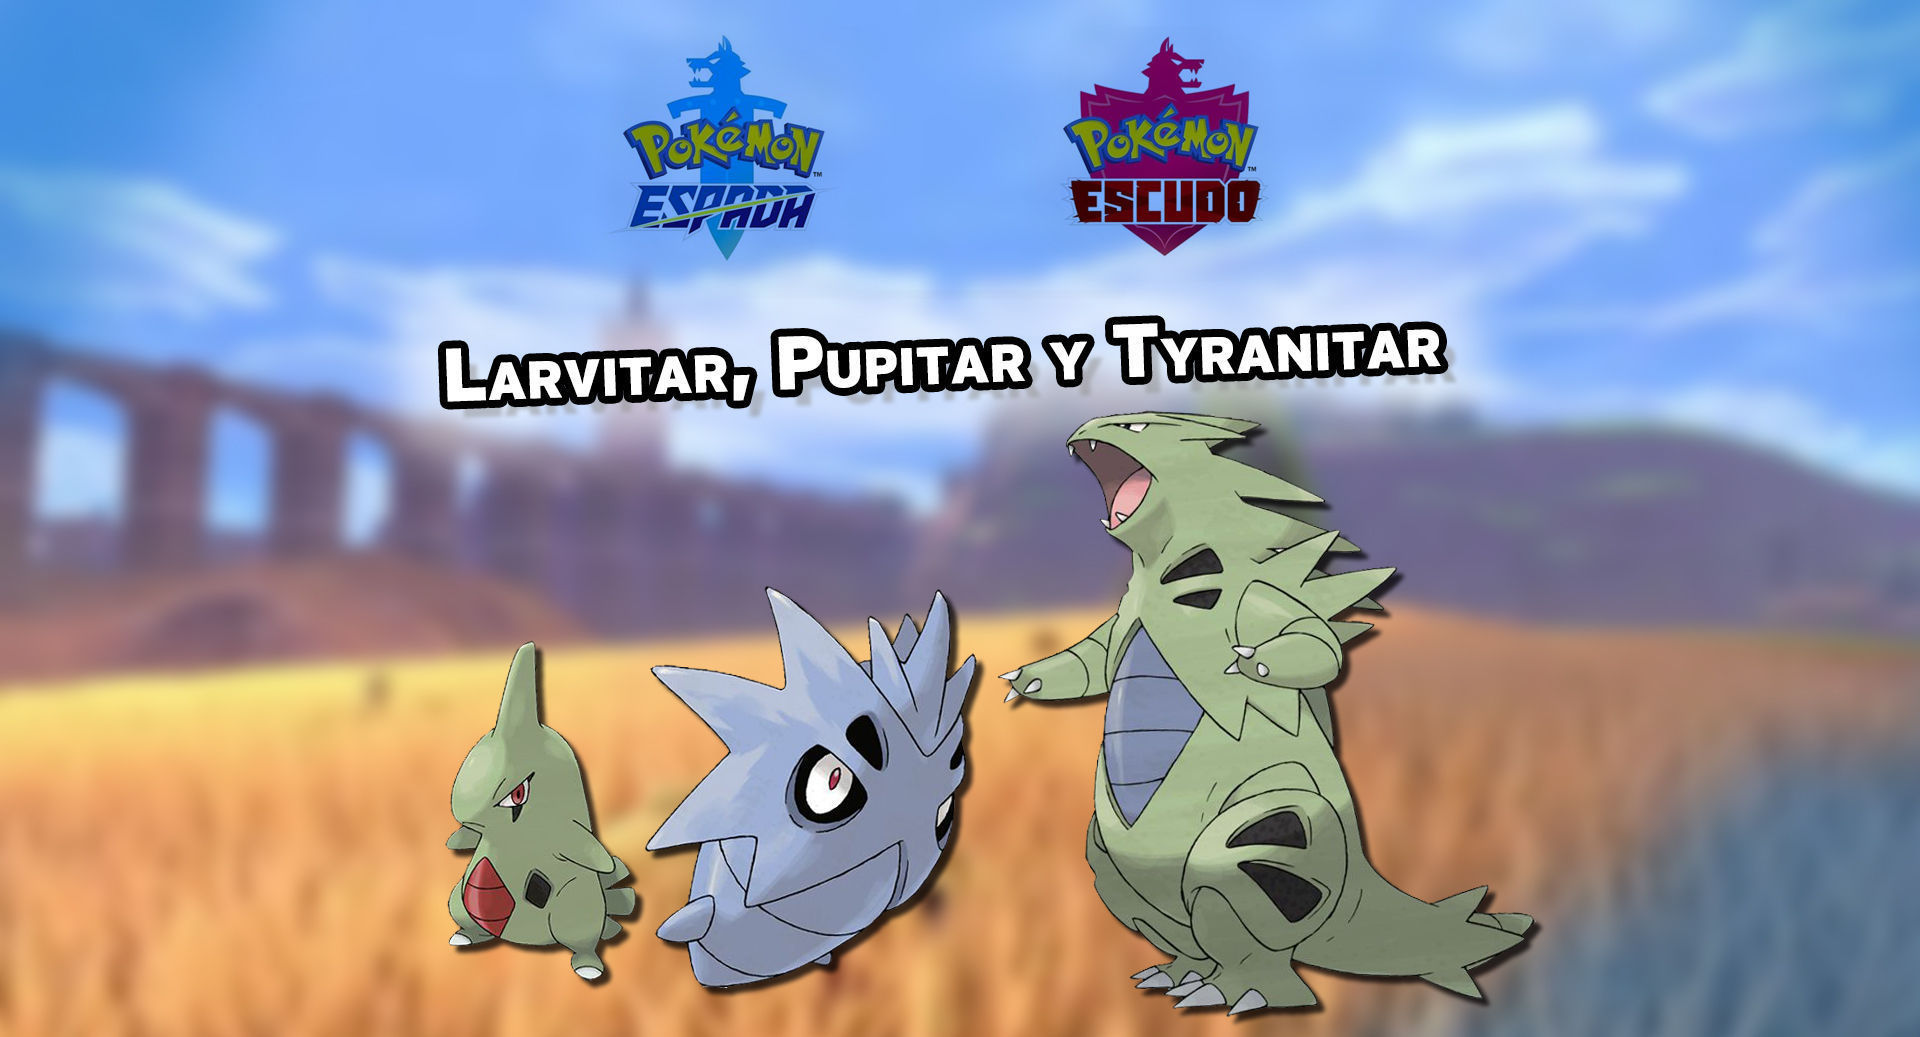 larvitar, pupitar, and tyranitar